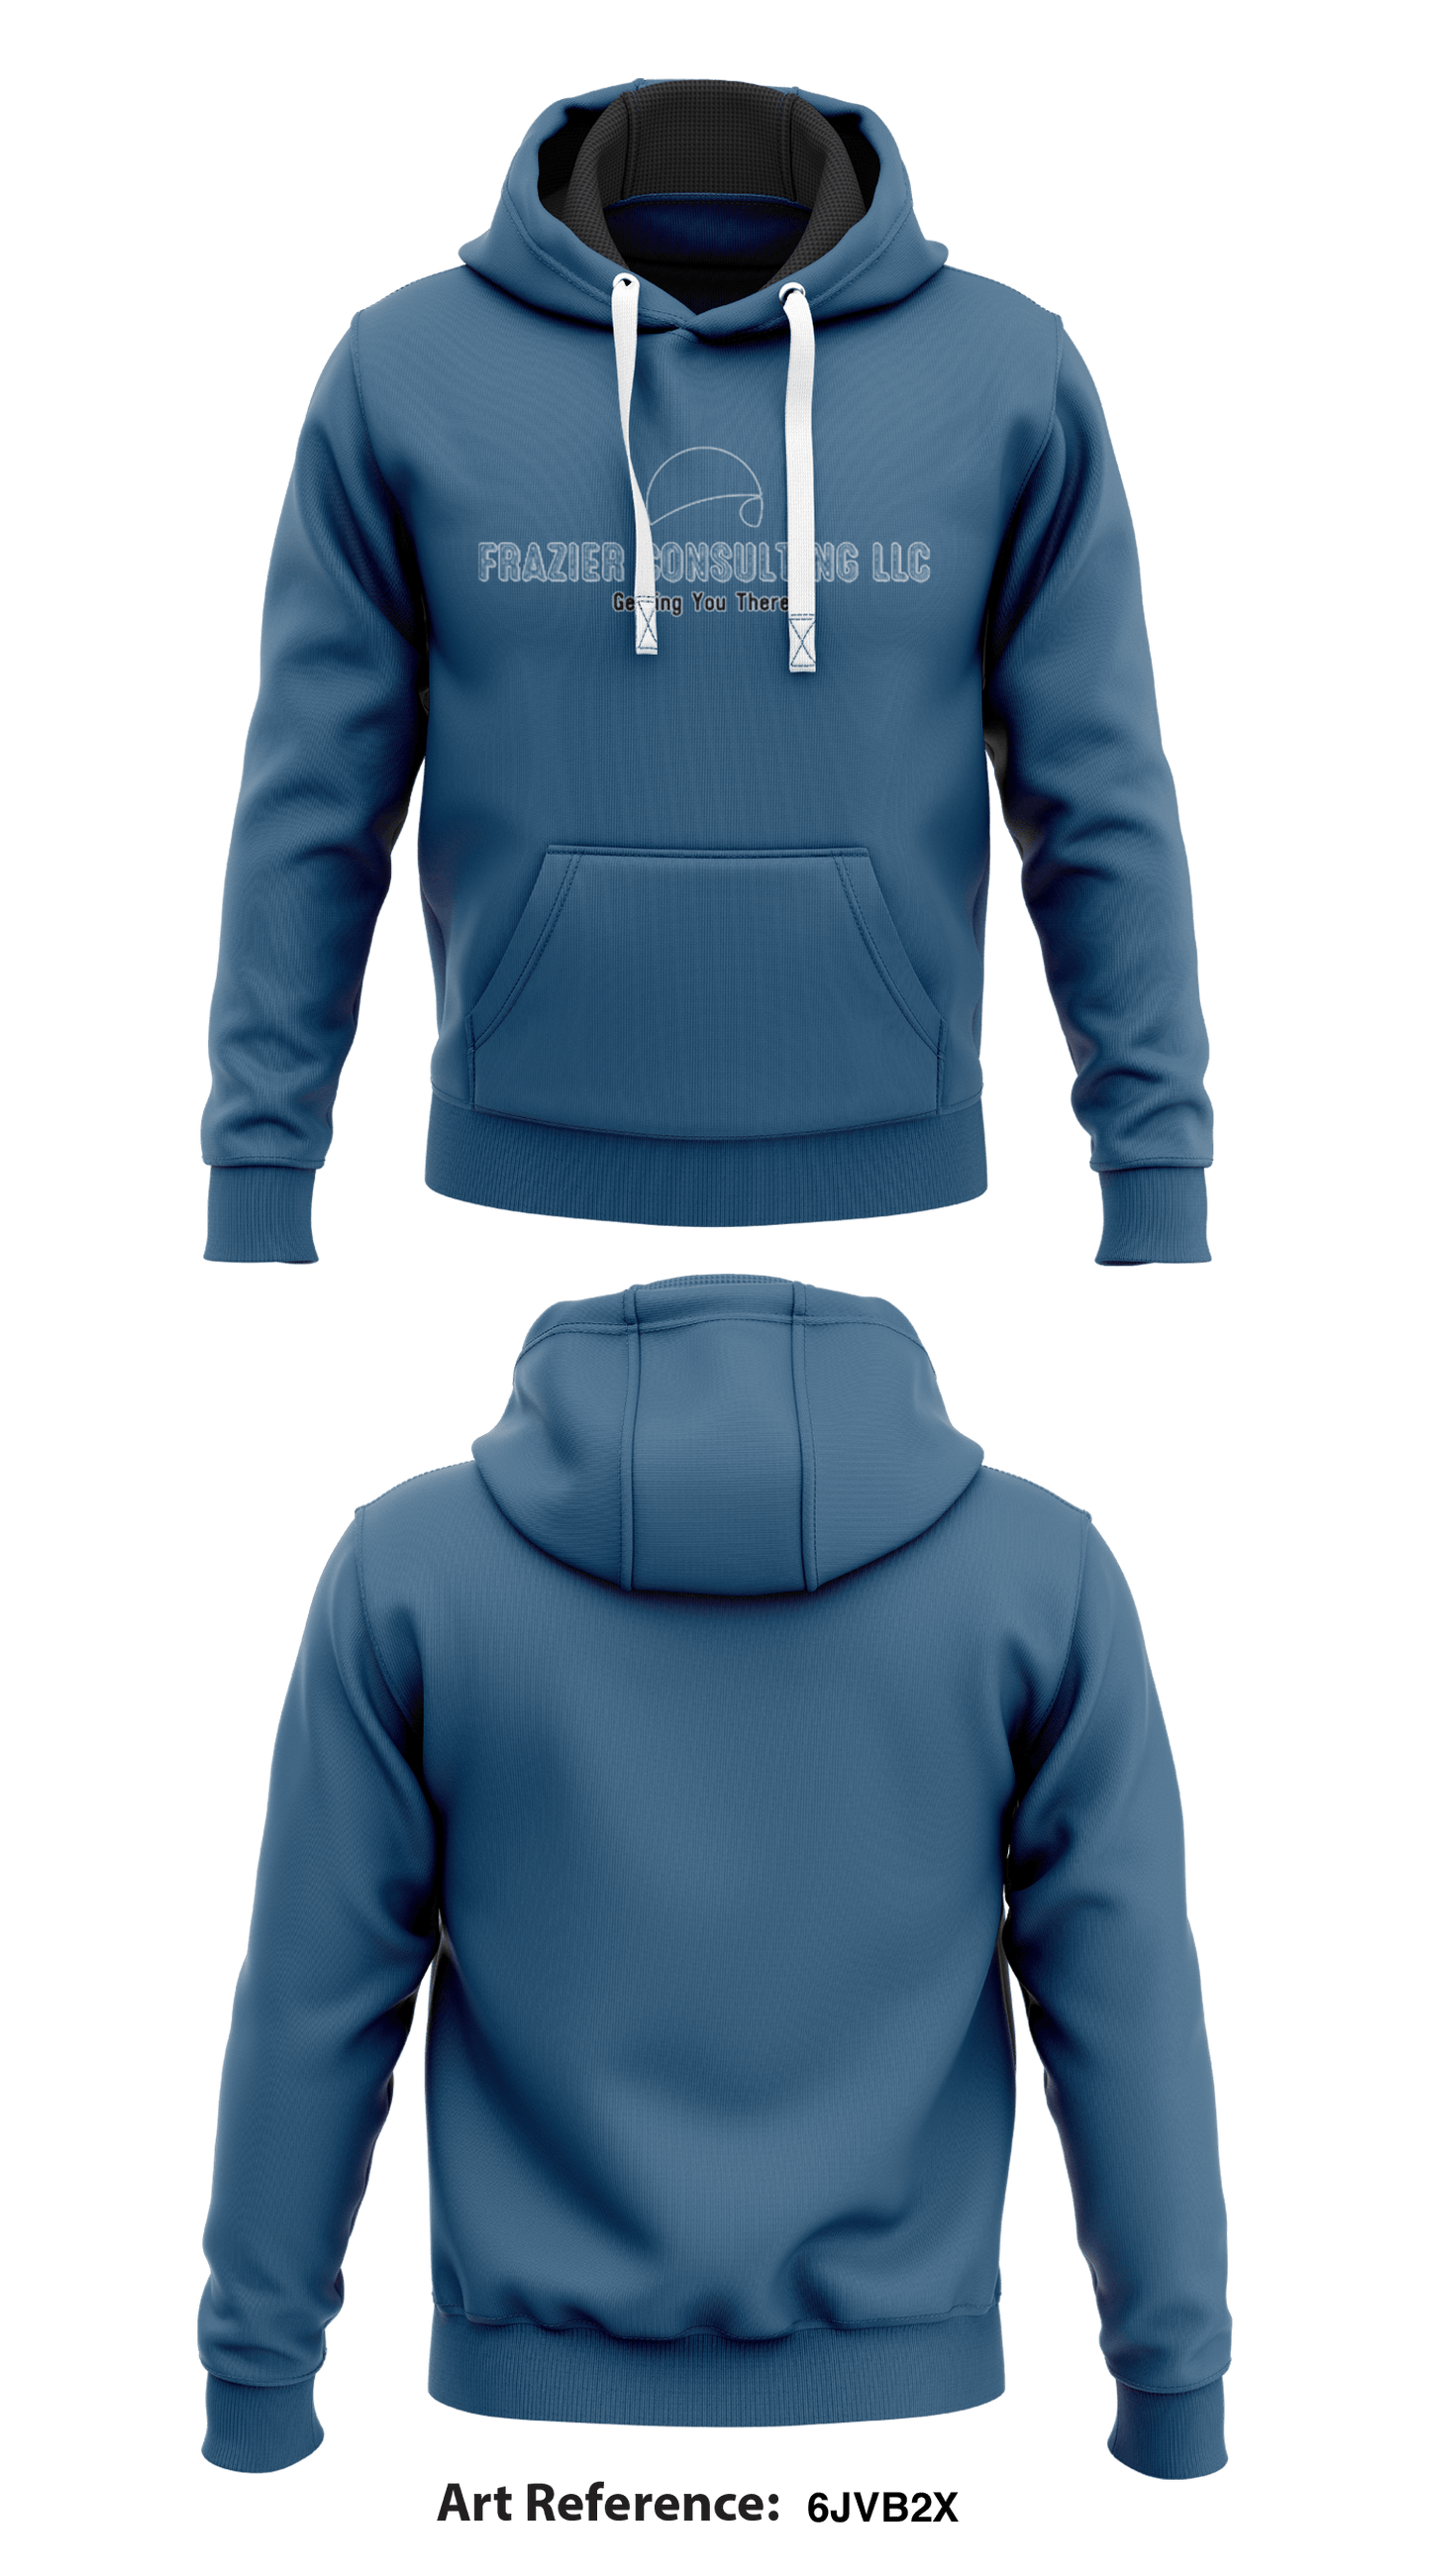 Frazier Consulting LLC  Core Men's Hooded Performance Sweatshirt - 6jvb2X